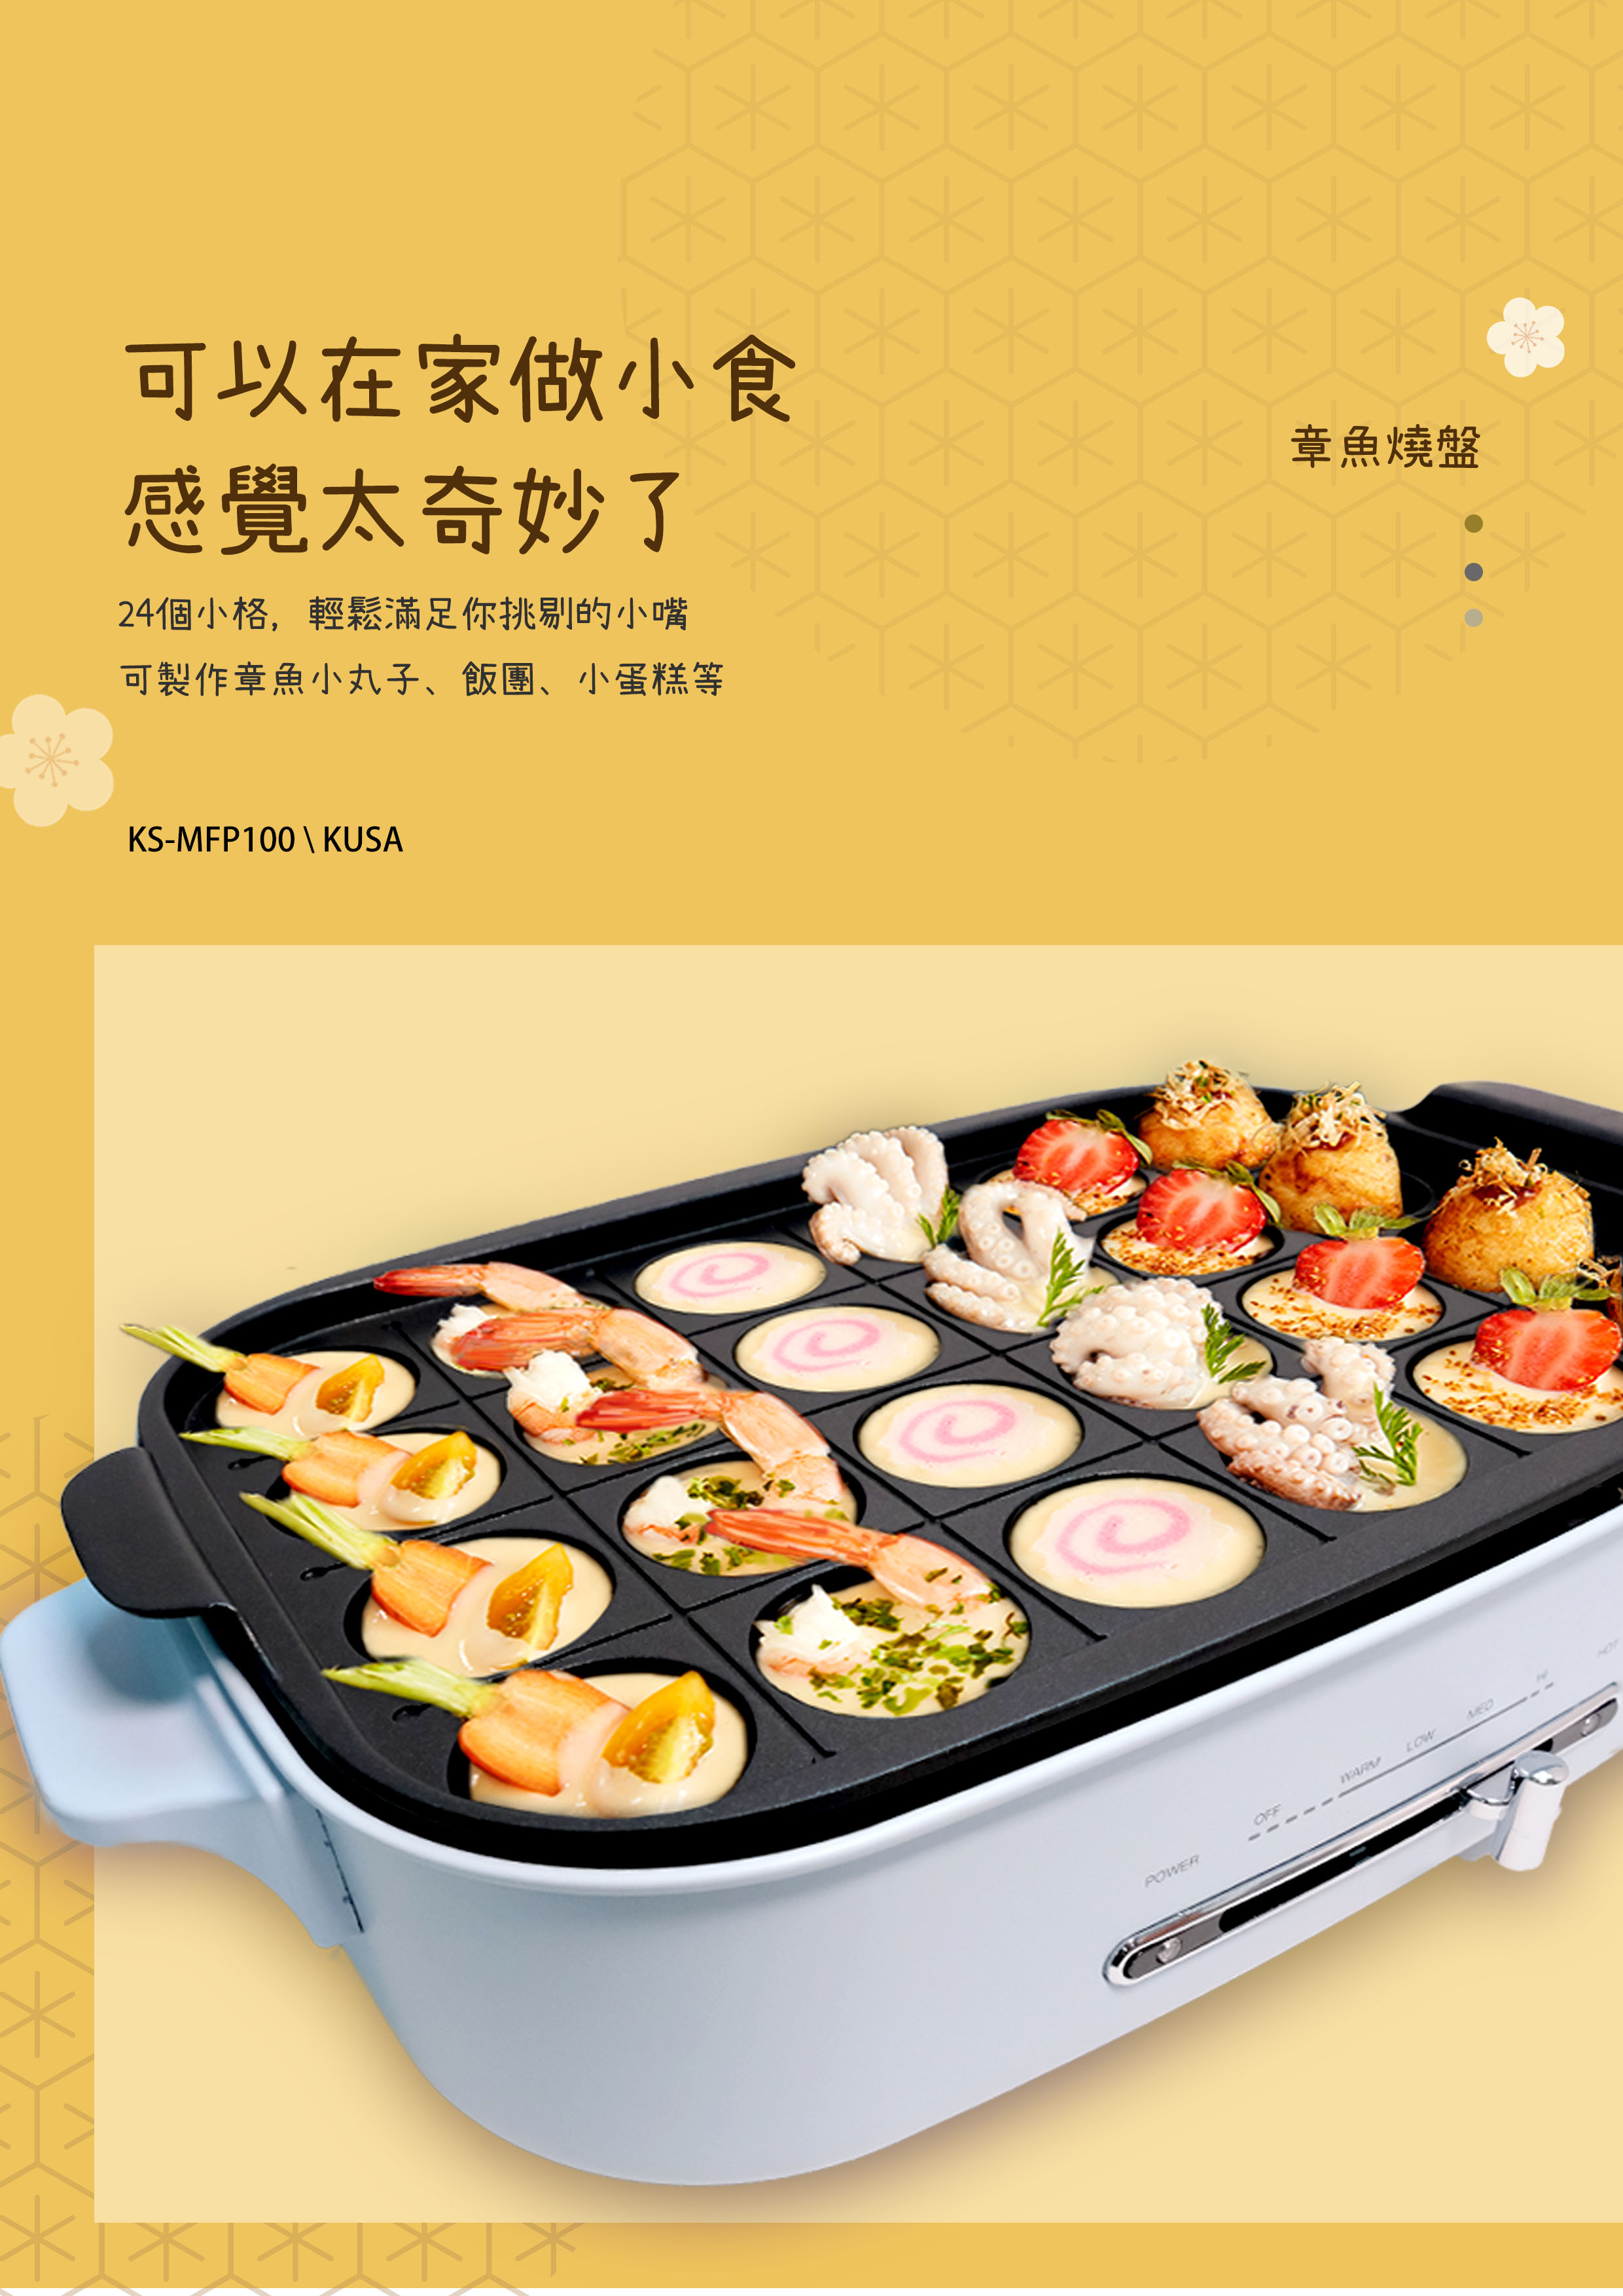 Kusa KS-MFP100 32cm Multi-function Cooking Stove